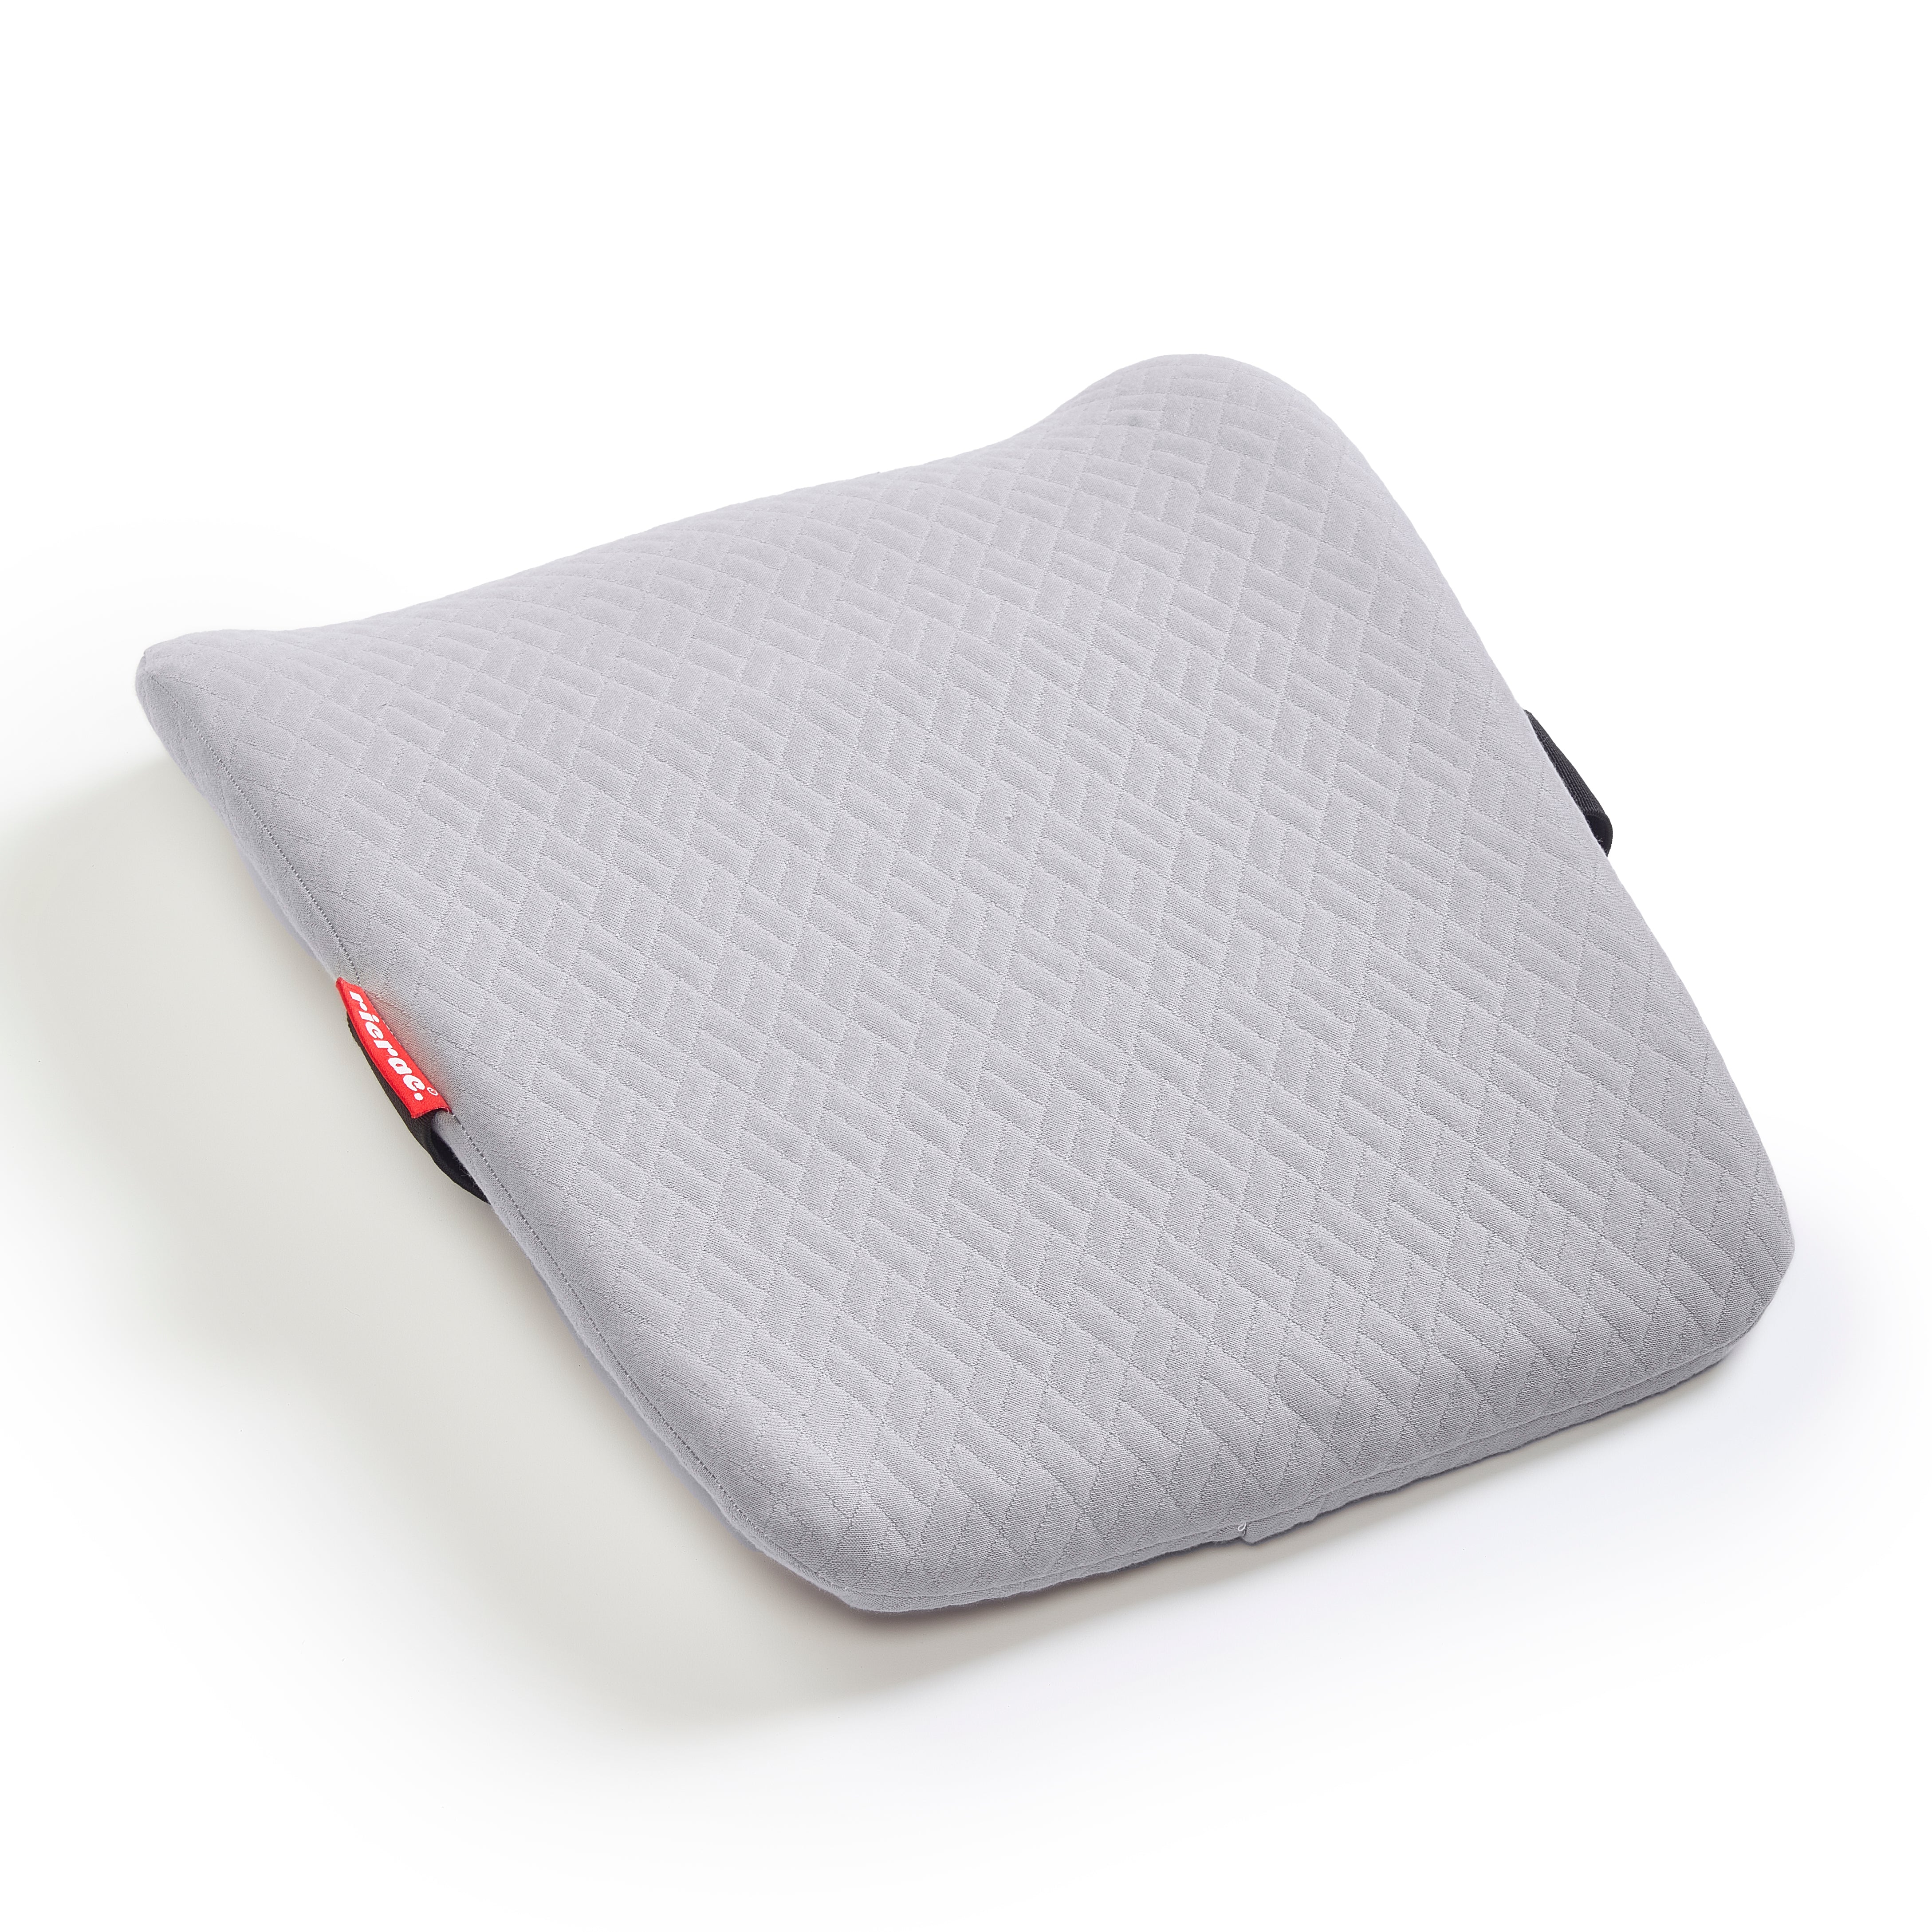 Ruf- Full back Support Pillow